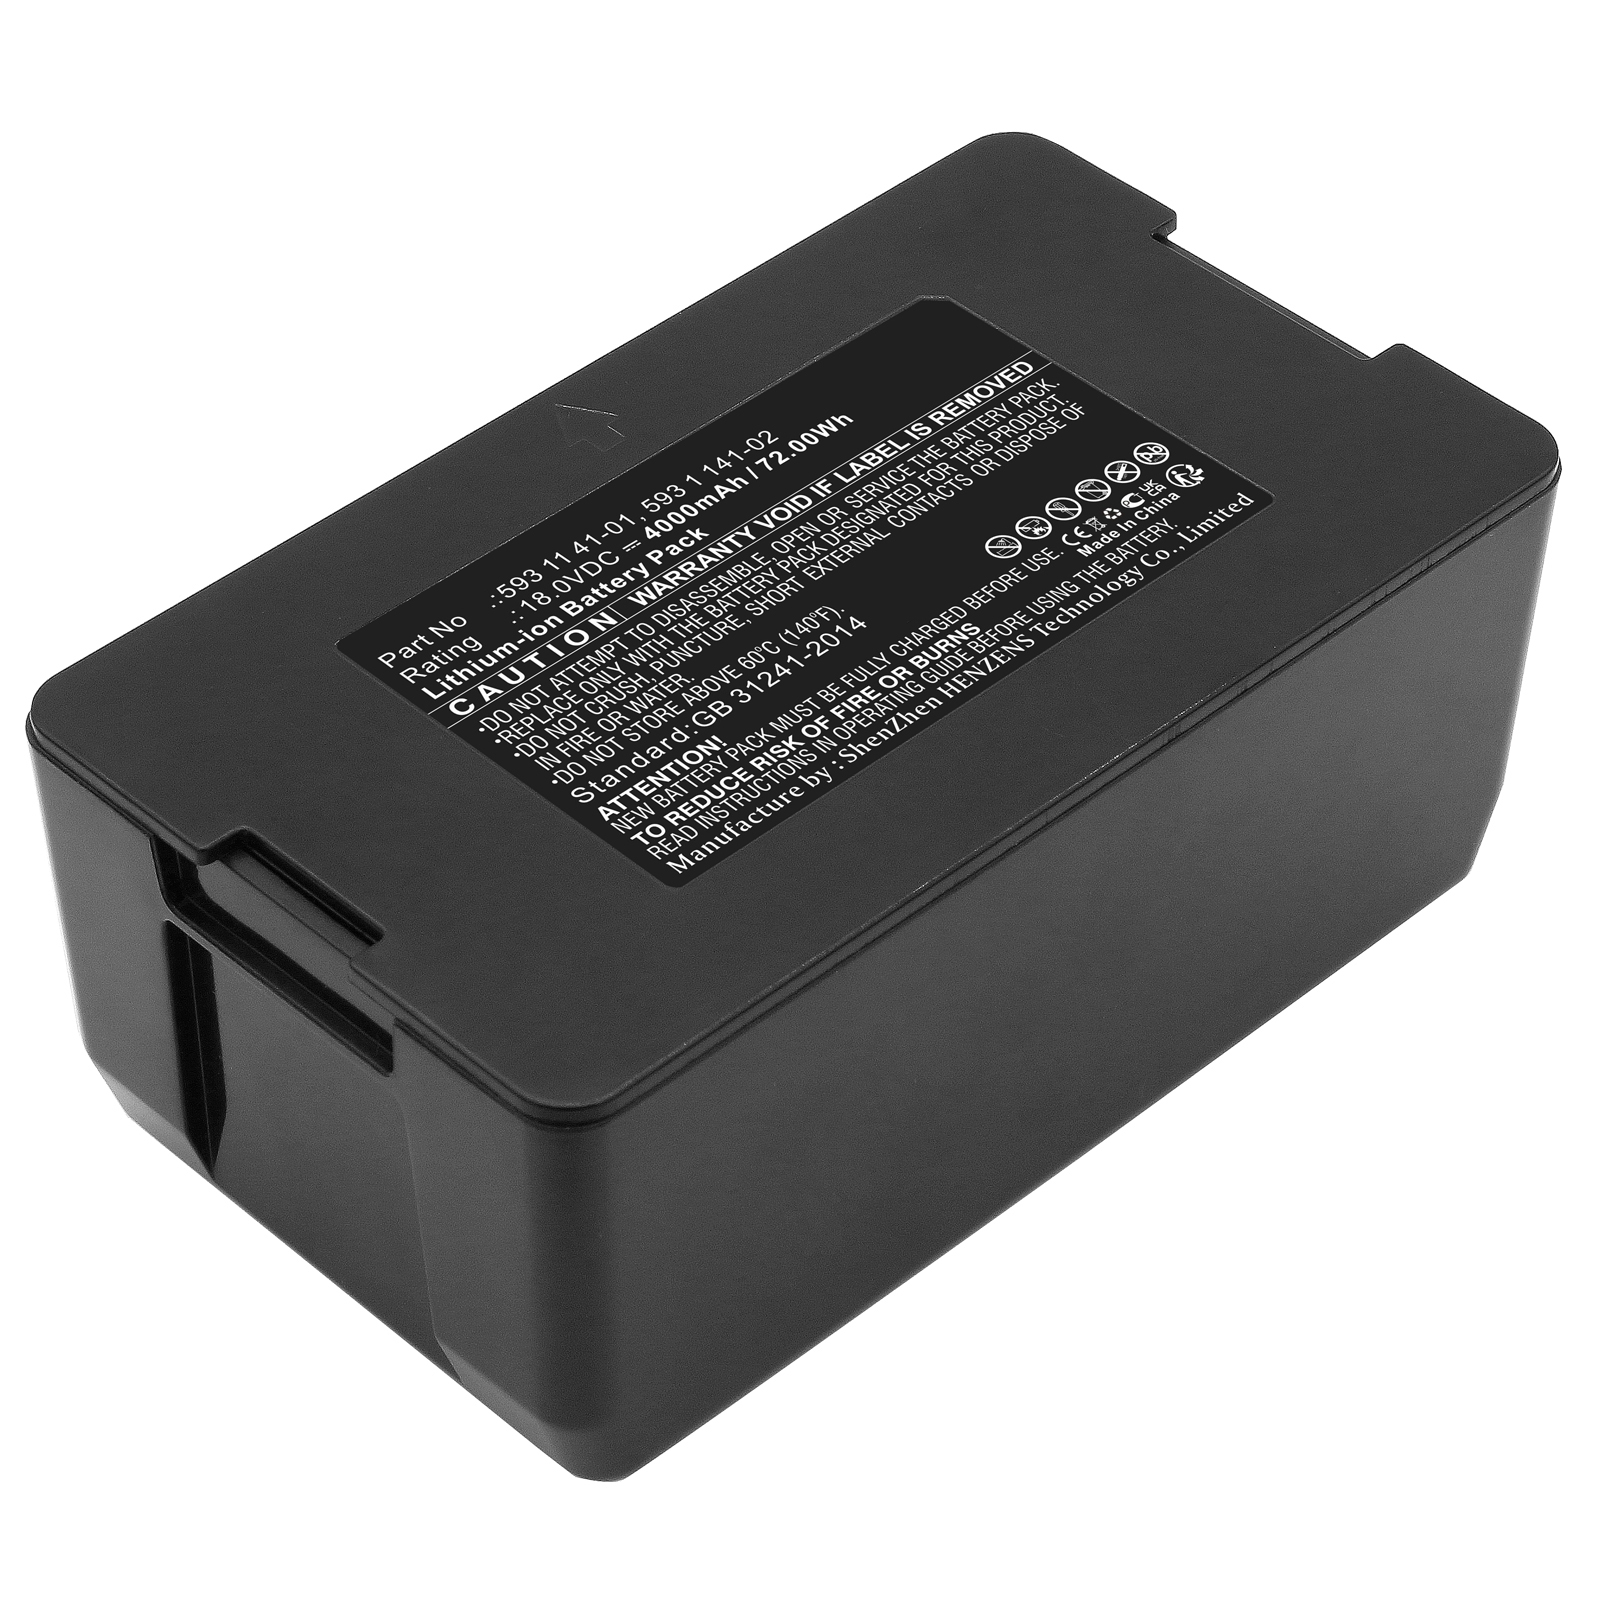 Synergy Digital Lawn Mower Battery, Compatible with Husqvarna 593 1 141-02 Lawn Mower Battery (Li-Ion, 18V, 4000mAh)